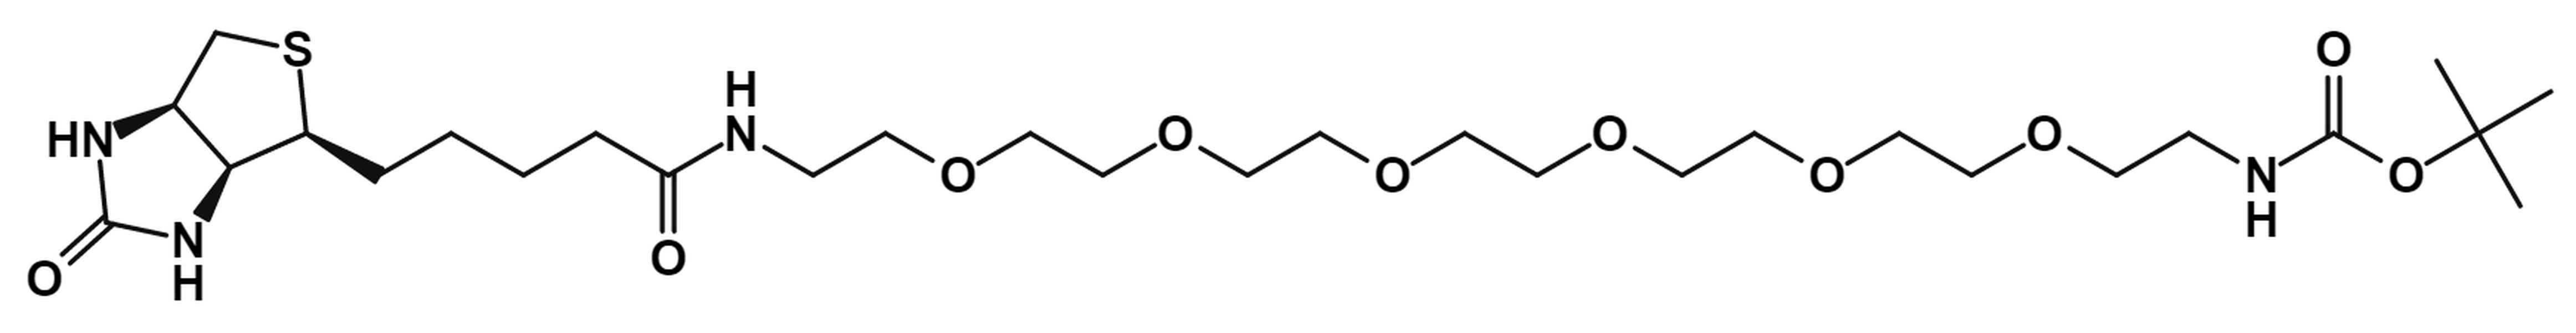 Biotin-PEG6-NH-Boc